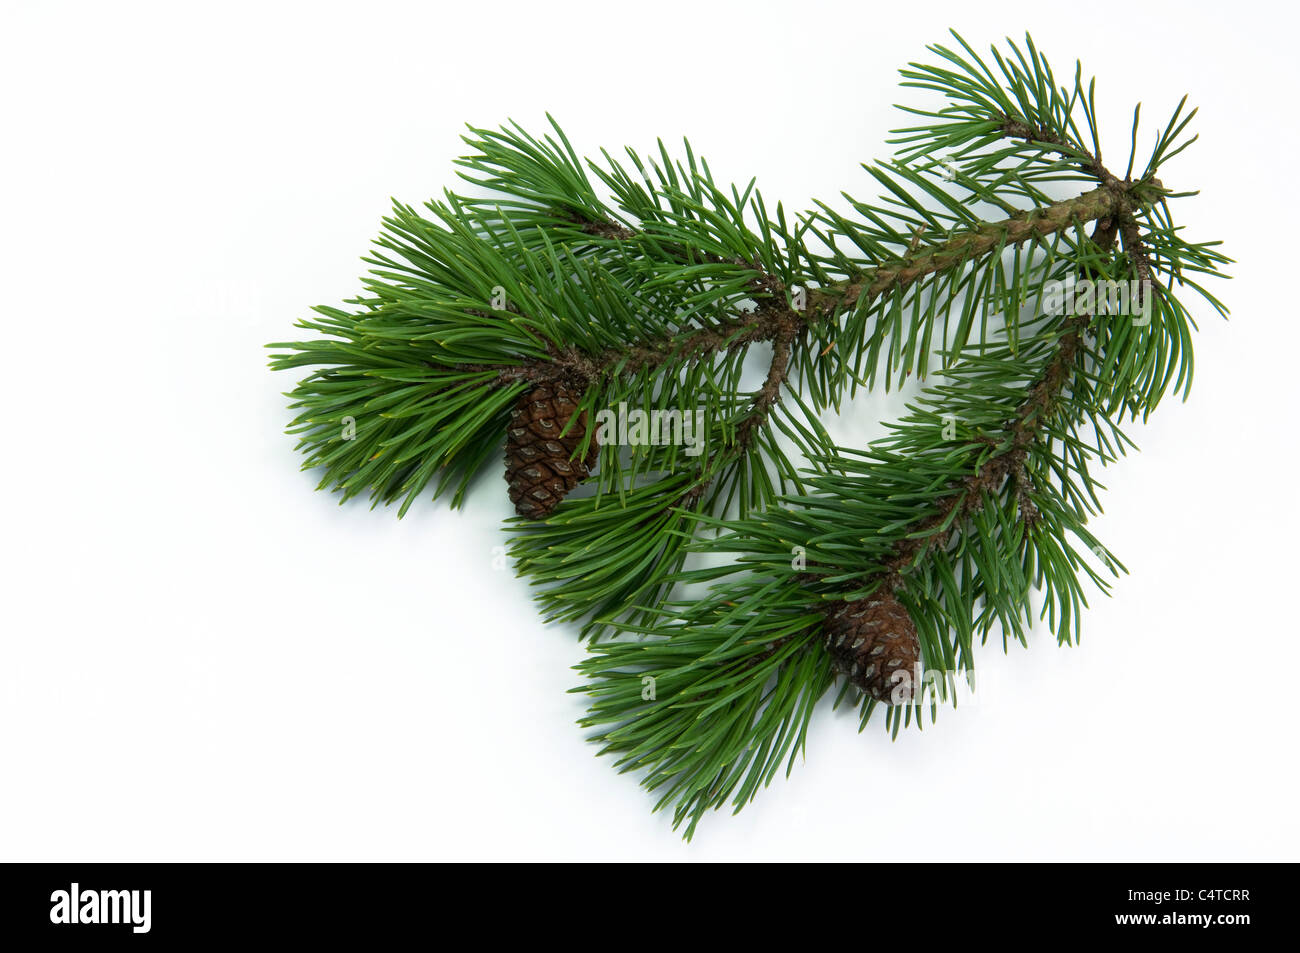 Dwarf Mountain Pine, Mountain Pine (Pinus mugo mugo), twig con conos. Studio ha disparado contra un fondo blanco. Foto de stock